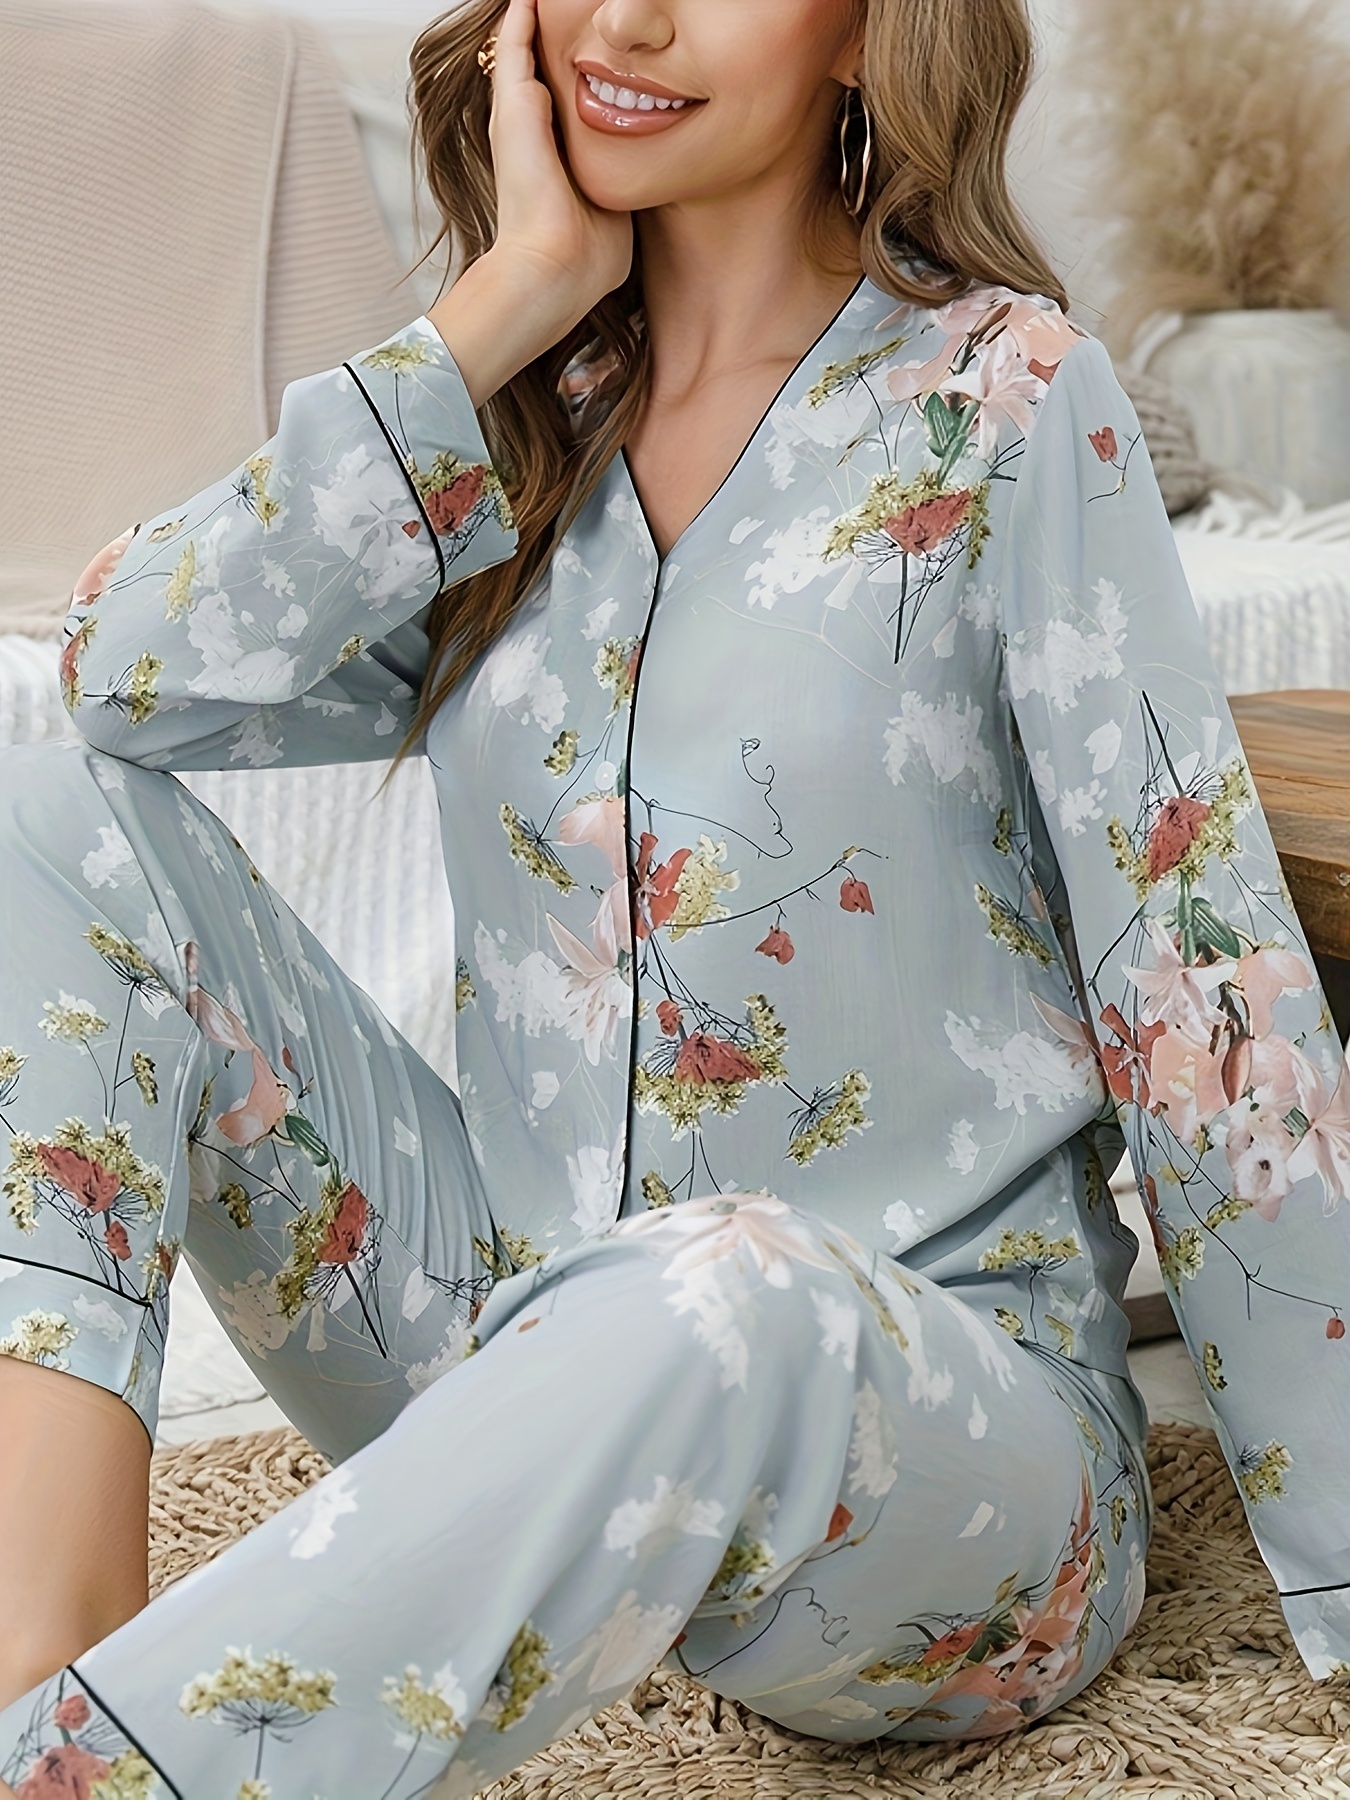 Women's 2 Piece Lace Trim Pajama Sets Cami And Shorts Pj Sets Sleepwear